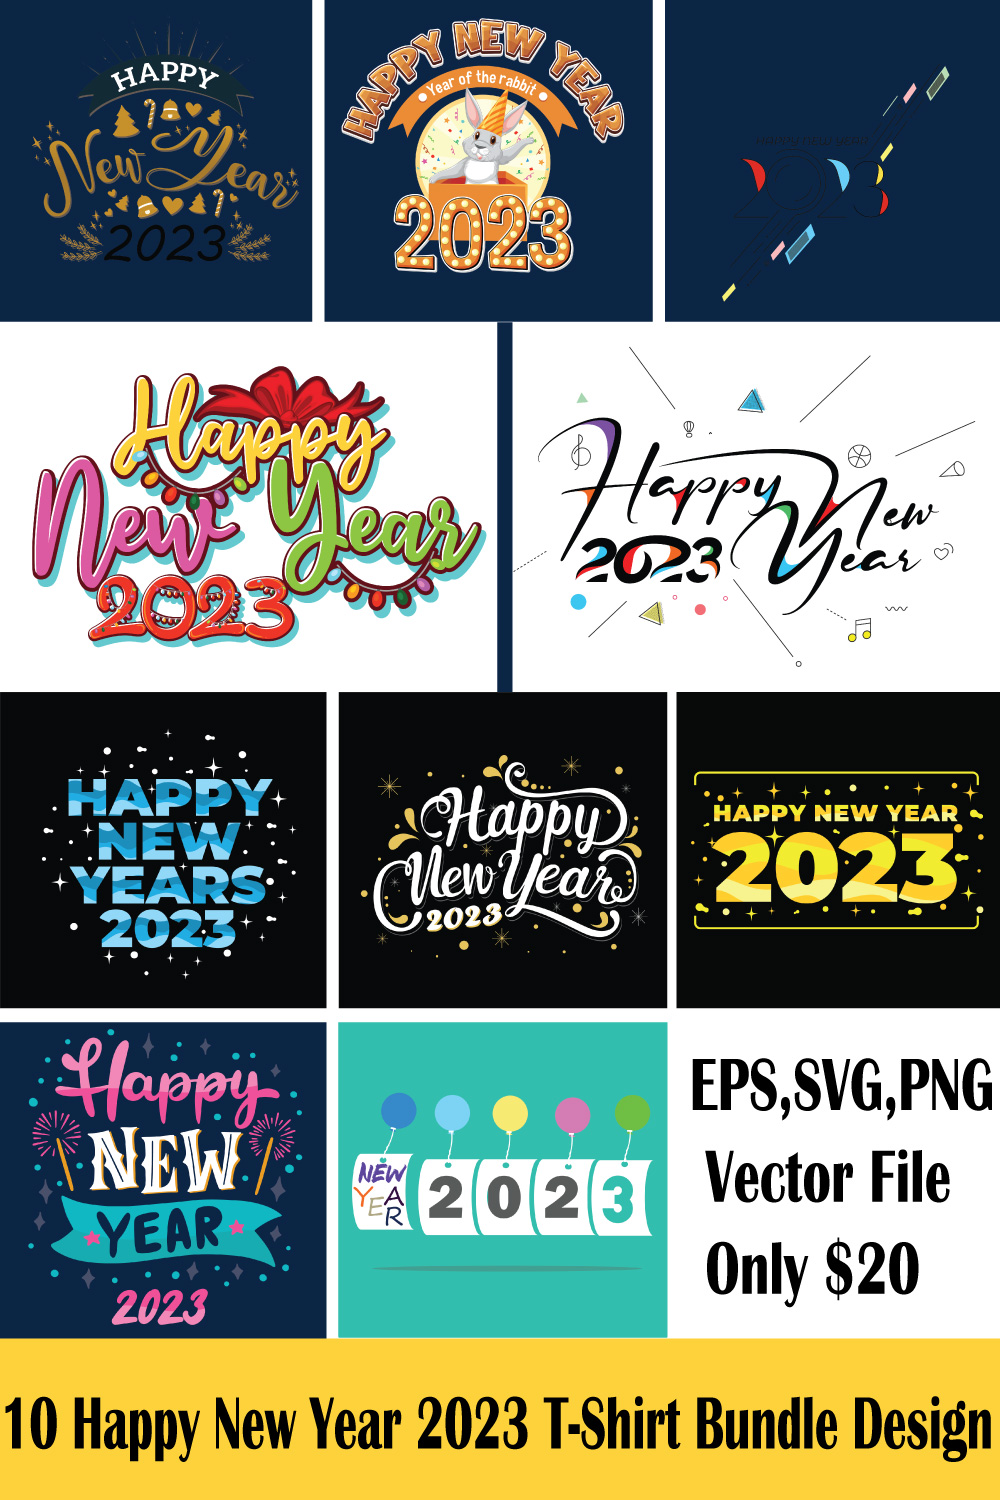 Happy New Year T-shirt Design pinterest image.